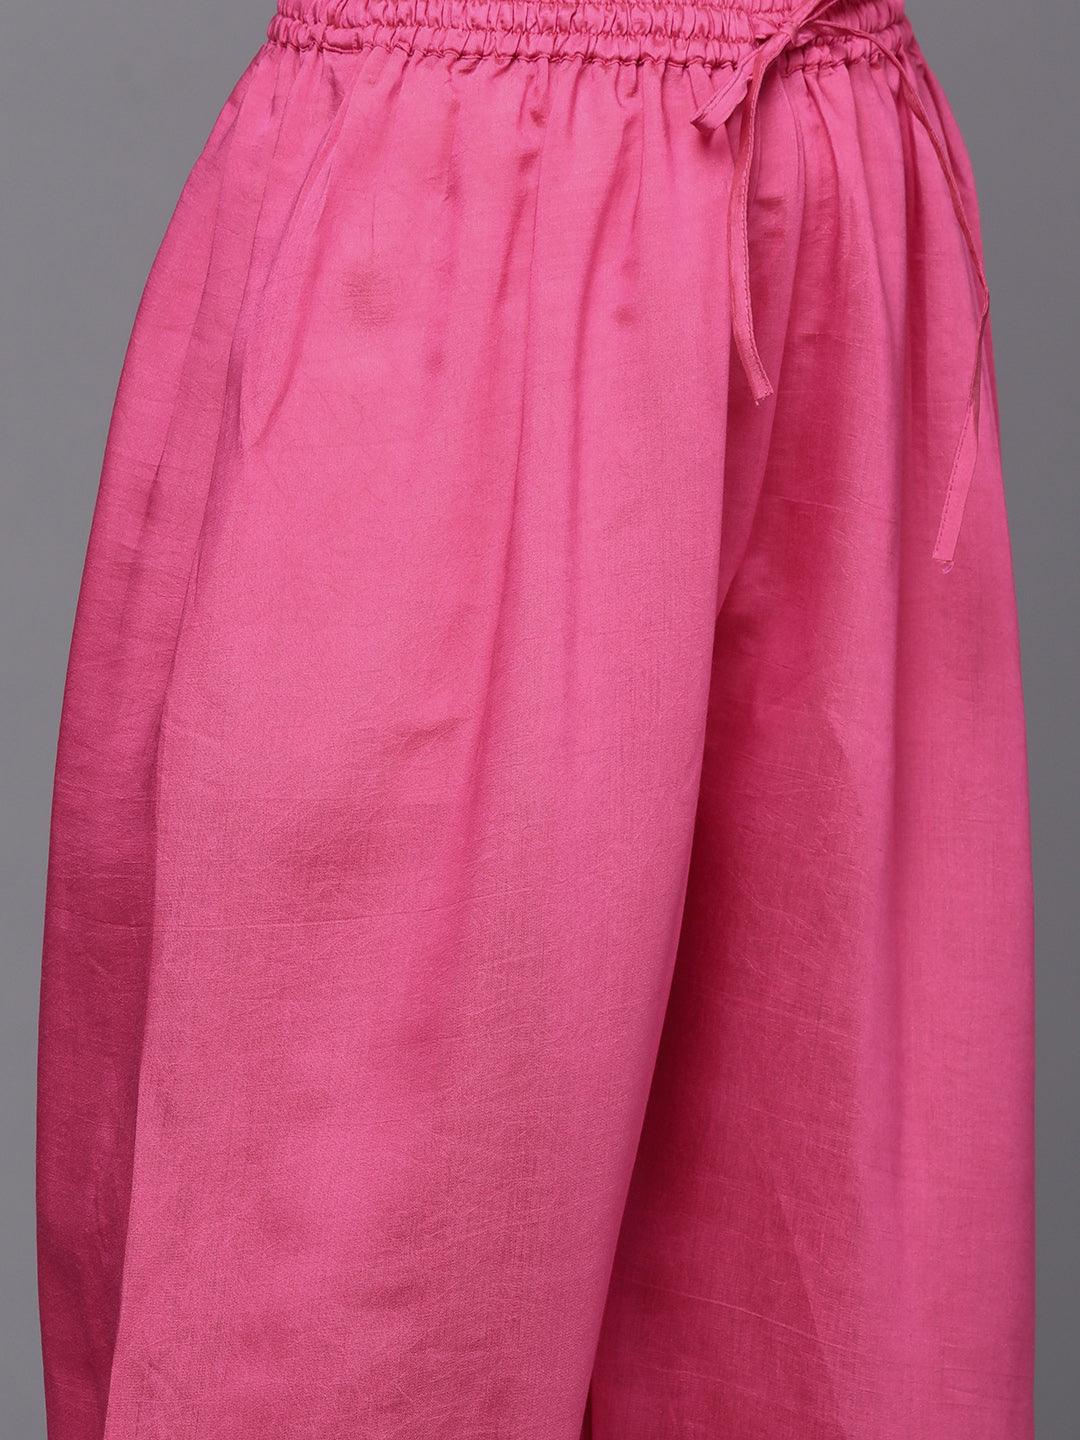 Pink Printed Silk Blend Straight Kurta With Salwar & Dupatta - Libas